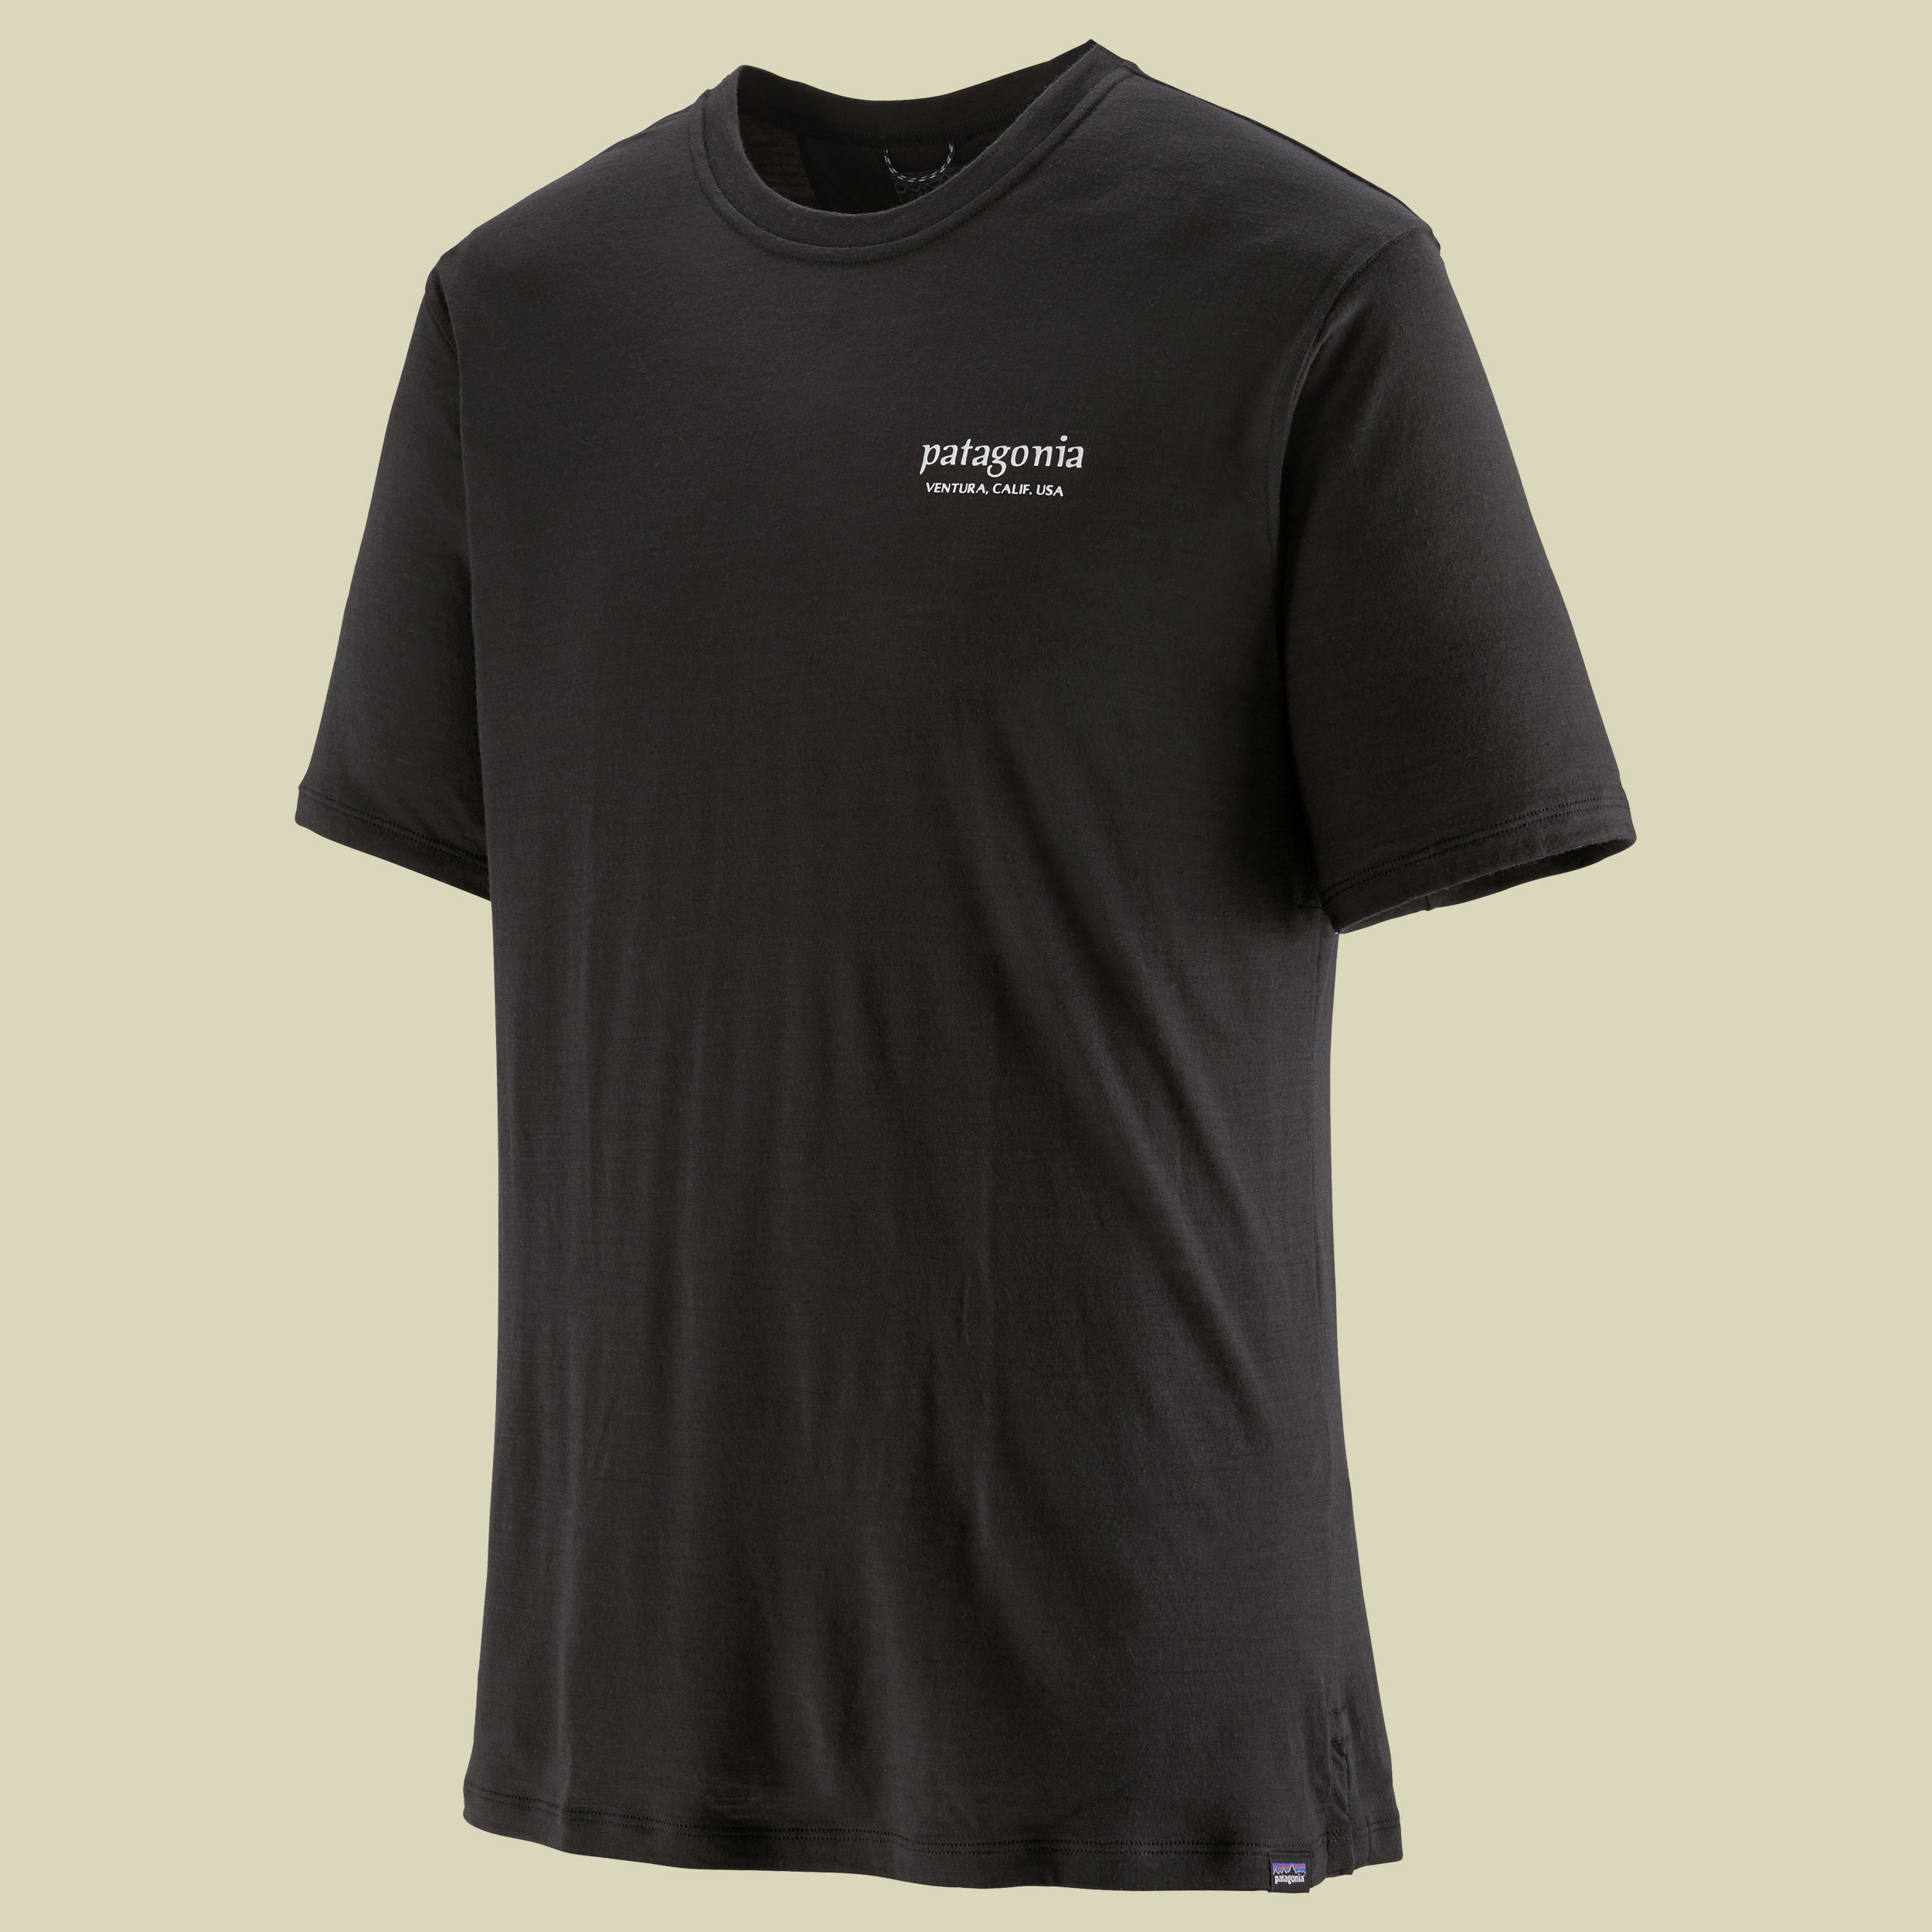 Cap Cool Merino Blend Graphic Shirt Men XL schwarz - heritage header:black